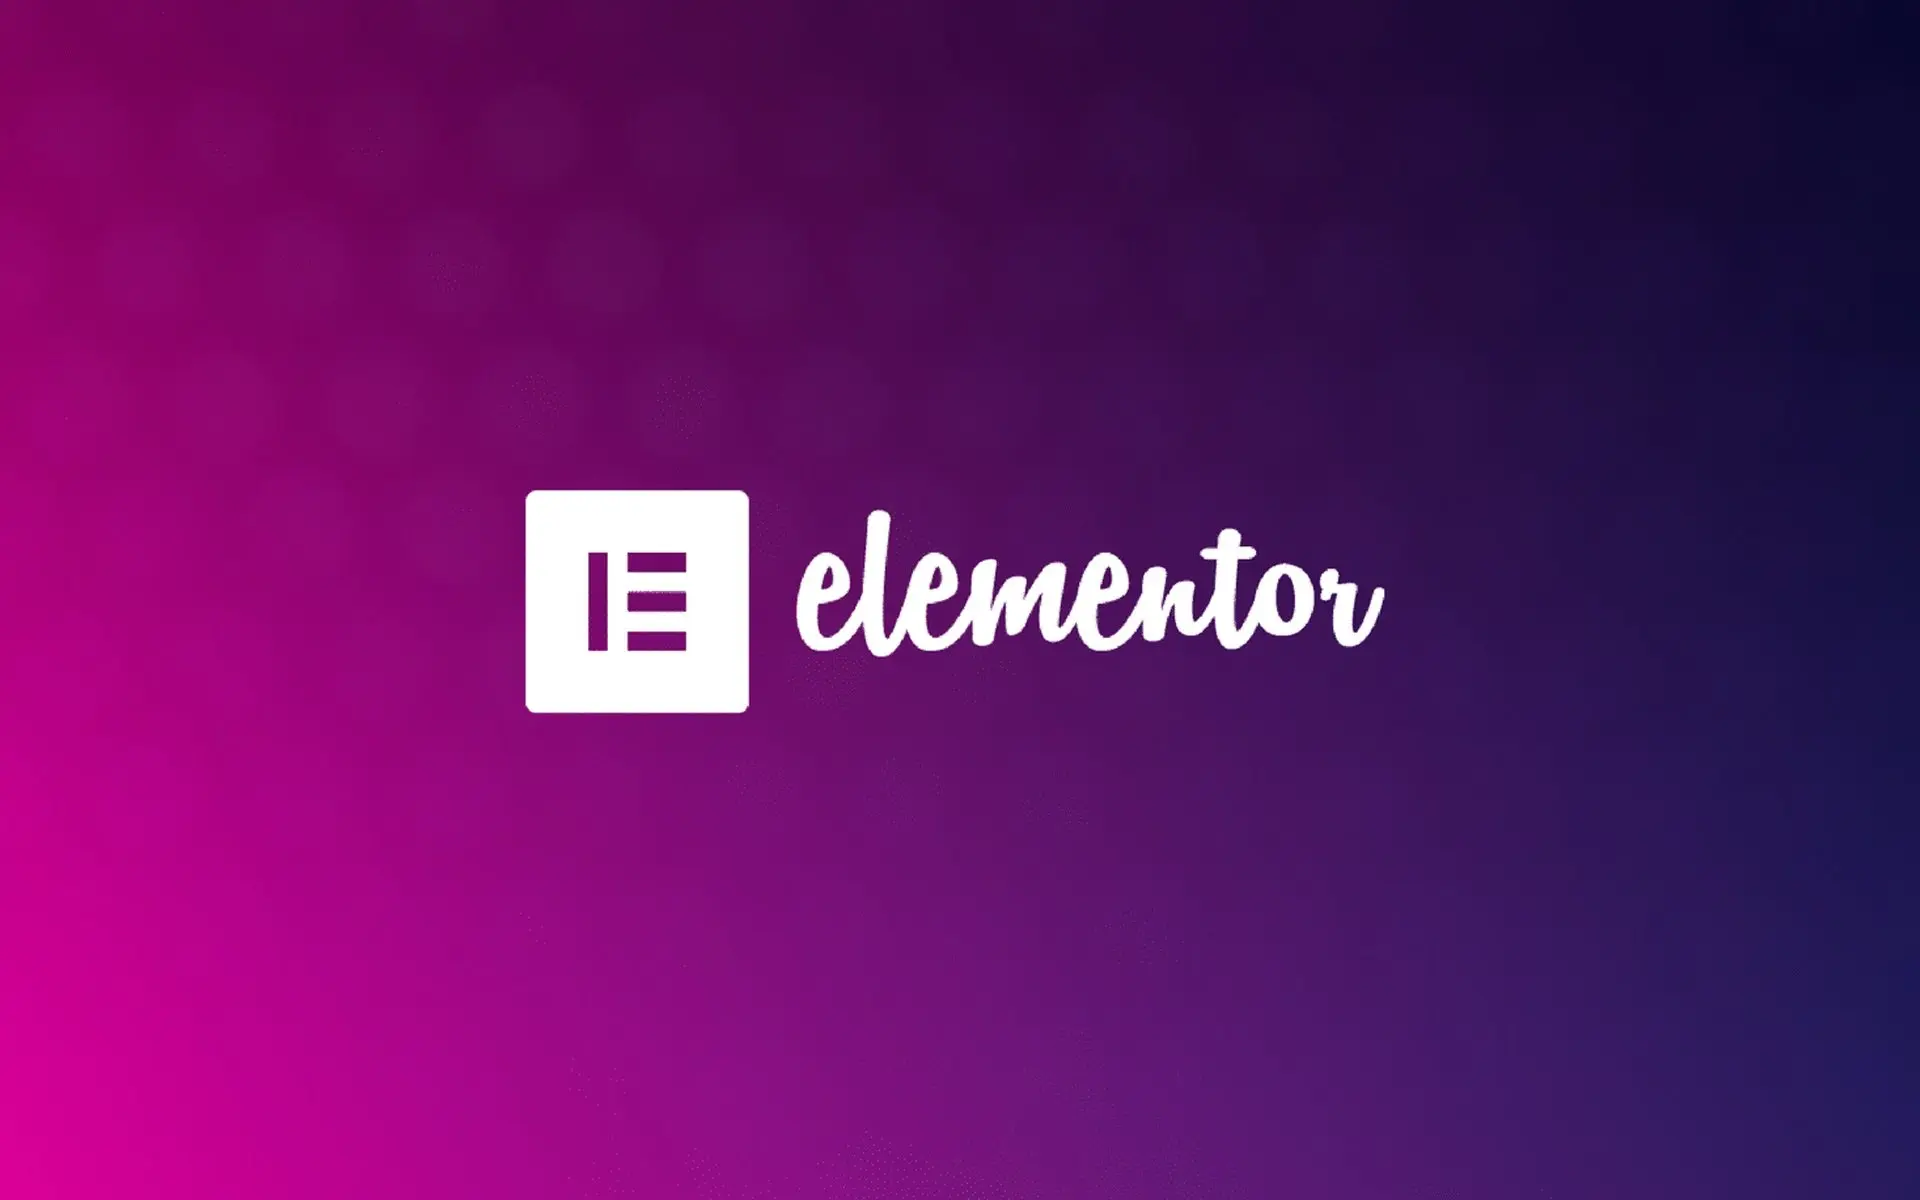 Elementor Pro Free Download